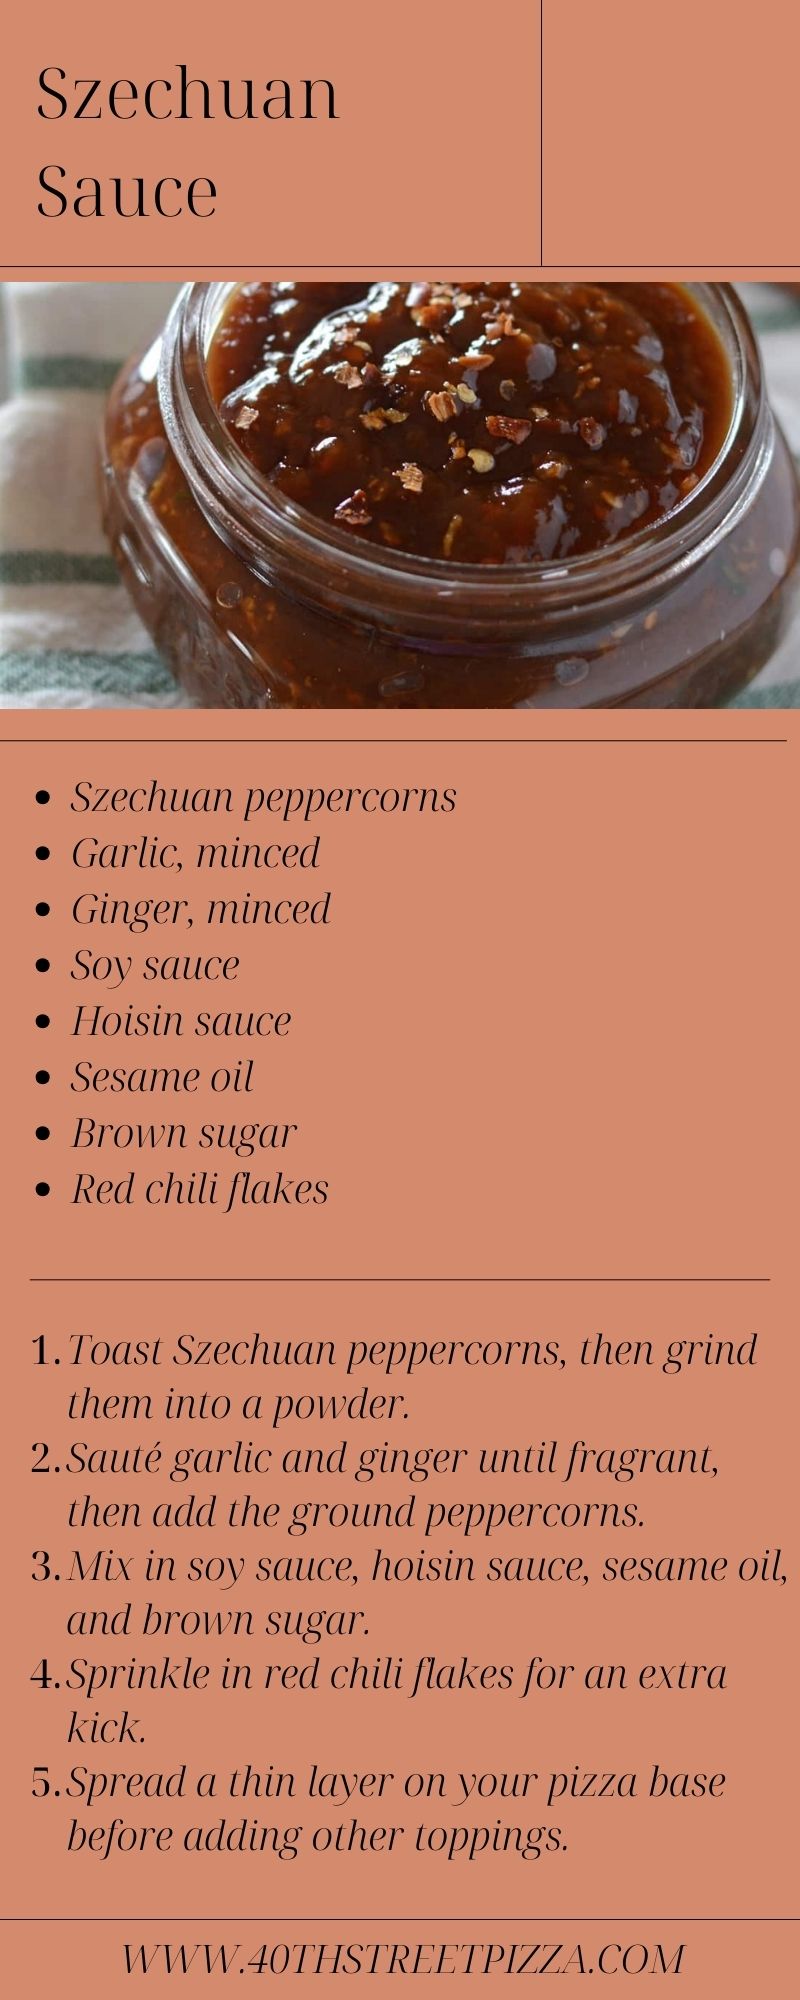 Szechuan Sauce infographic